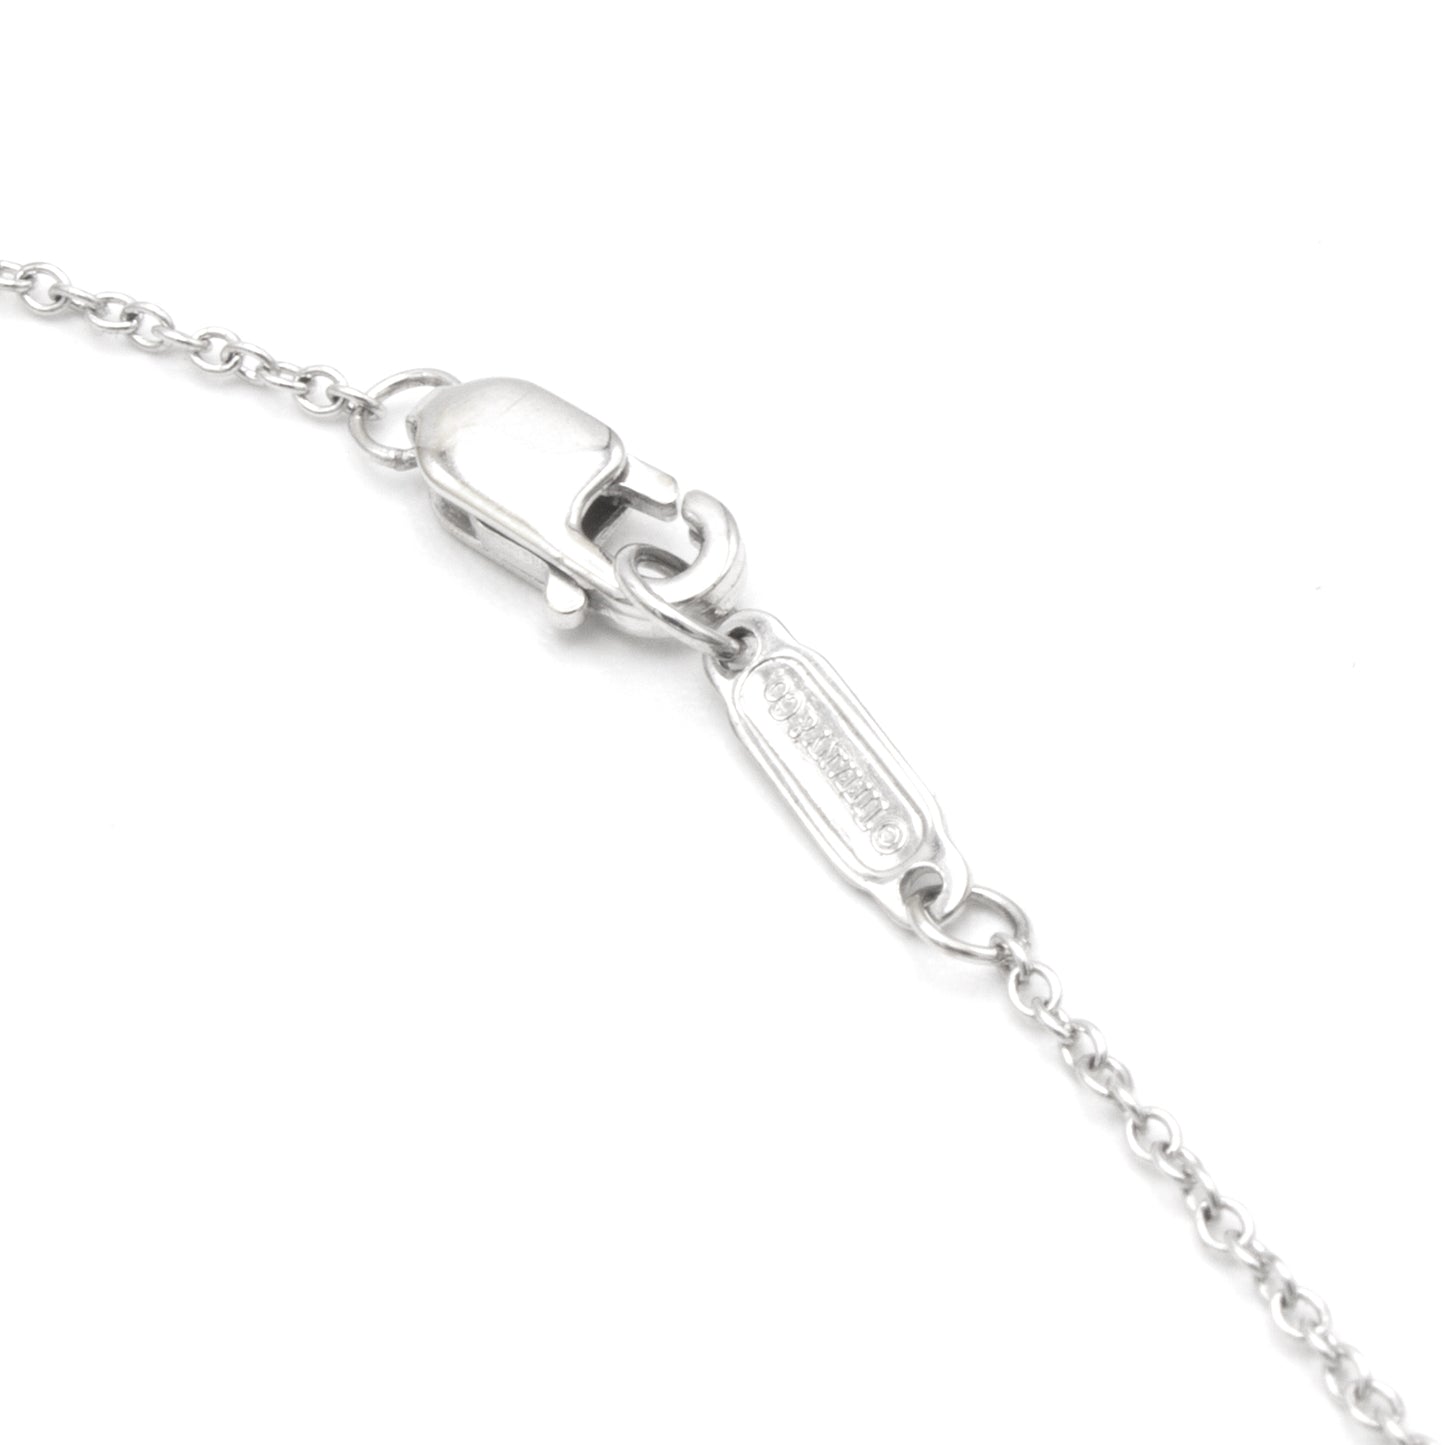 Tiffany & Co multi hearts 18K necklace